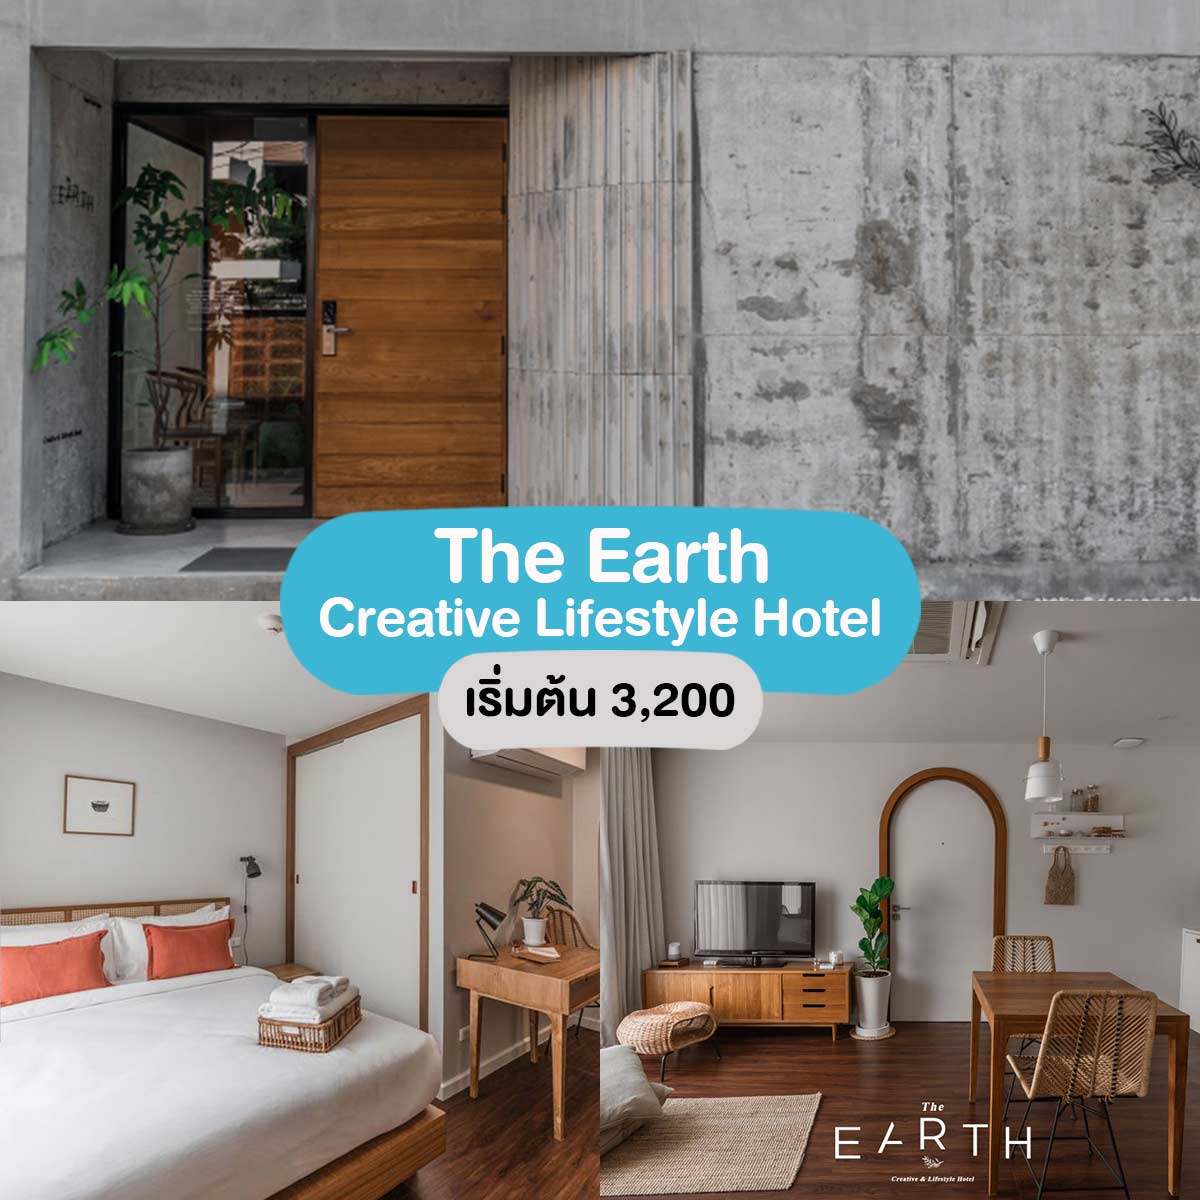 The Earth Creative Lifestyle Hotel